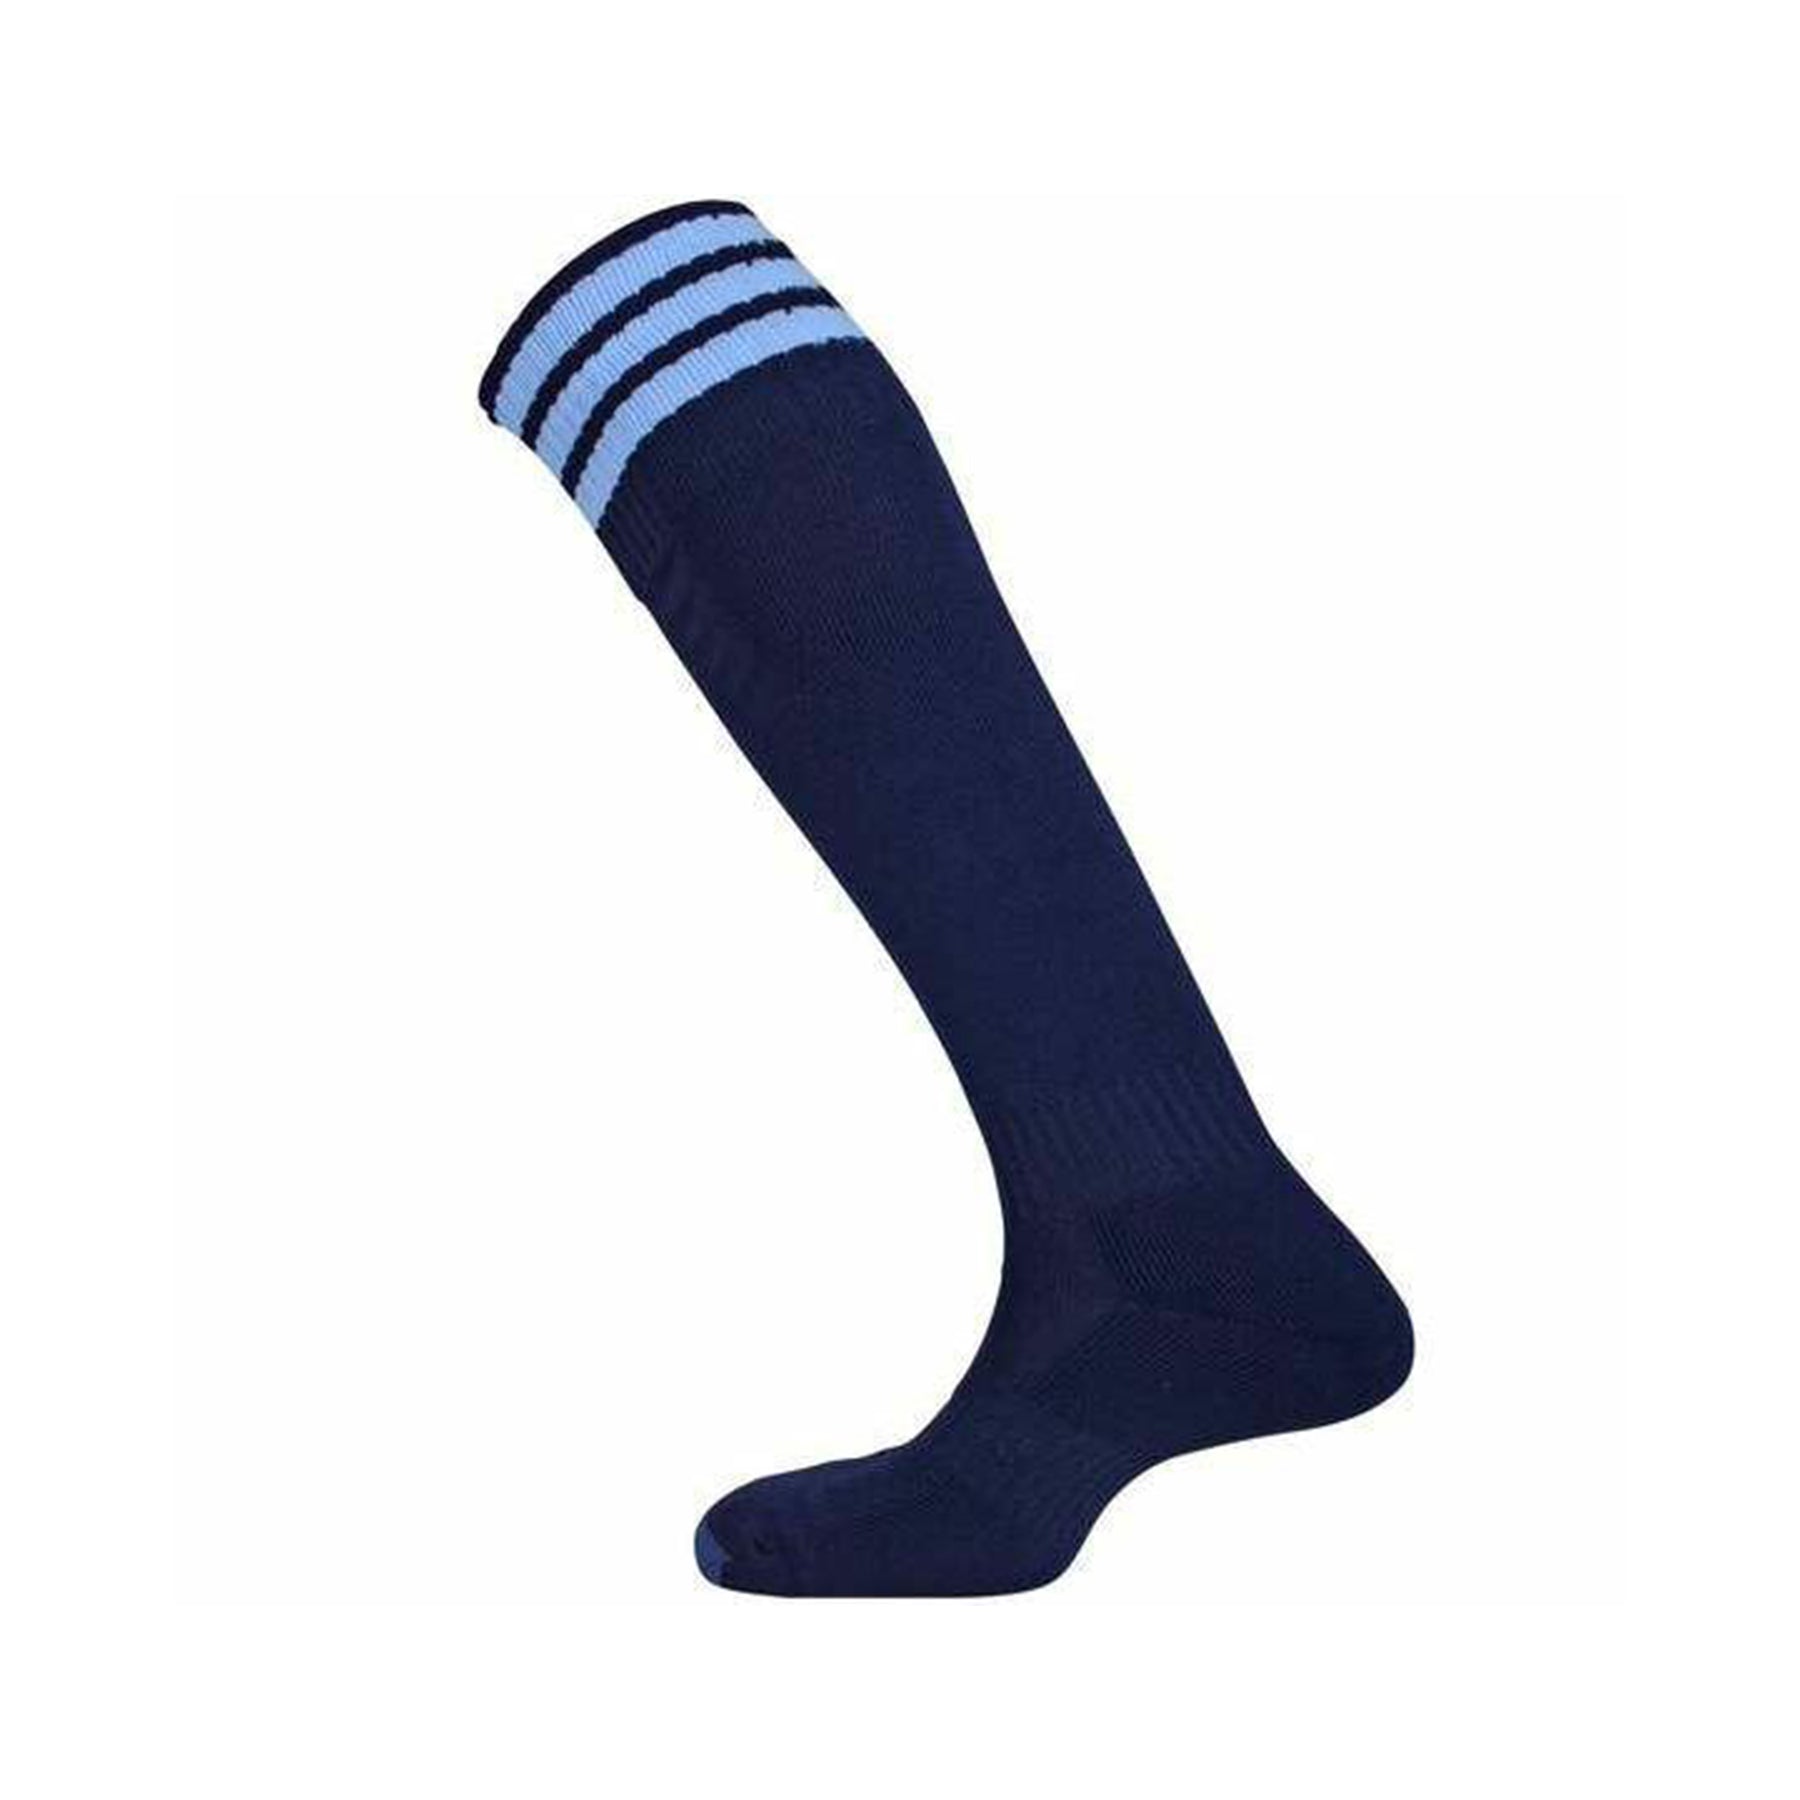 Piranha Games Socks: Navy/Sky